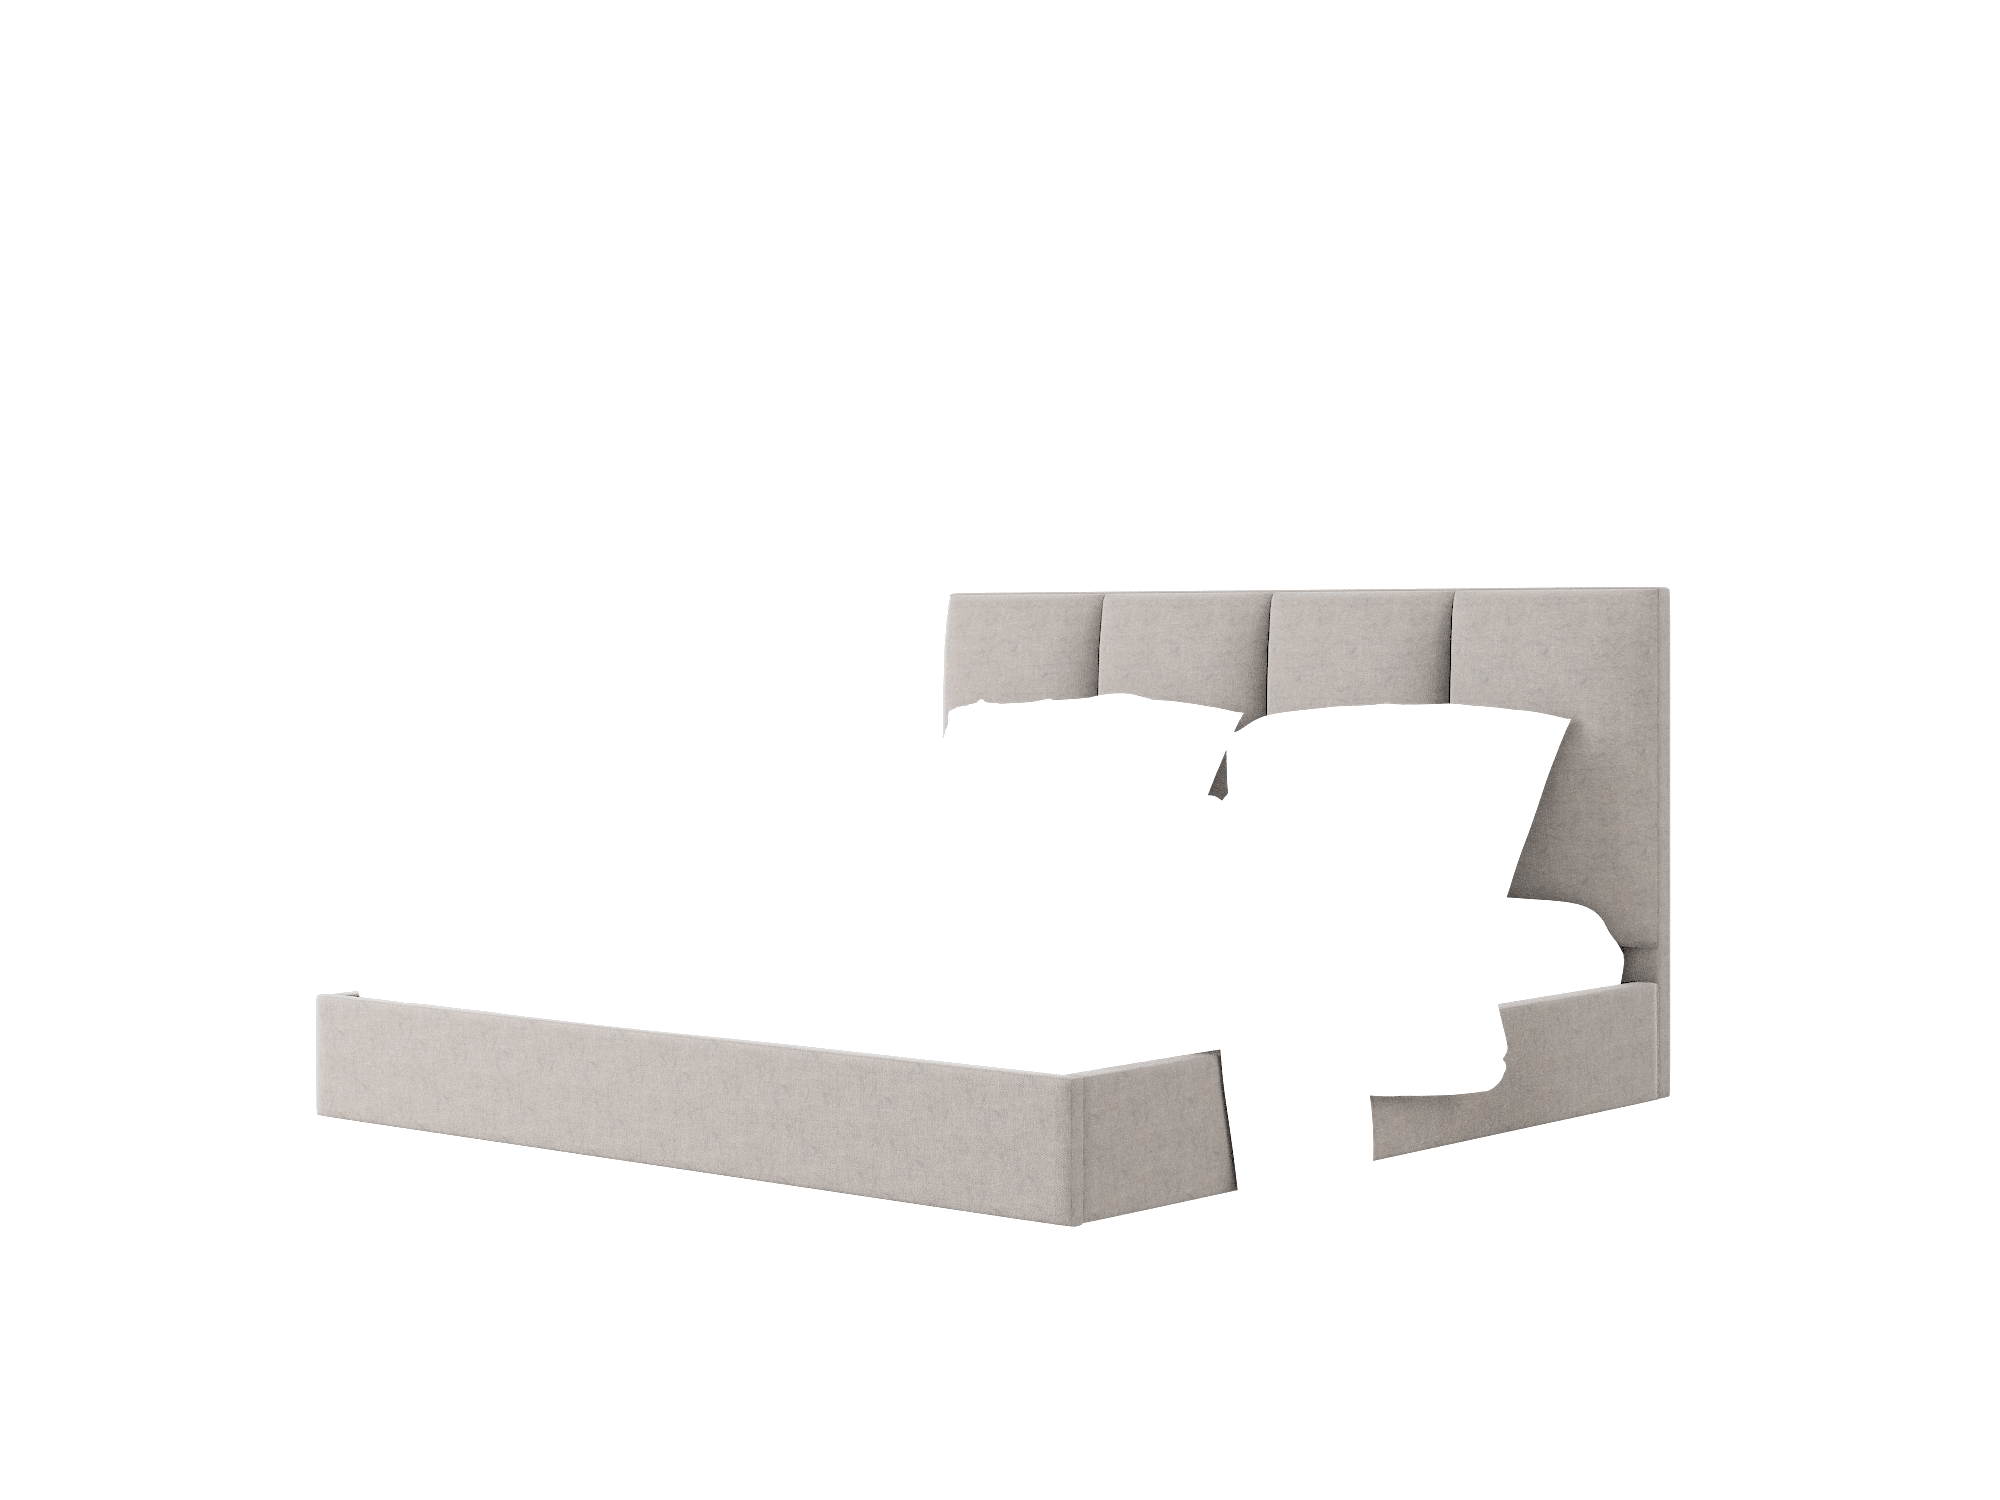 Celine Suave Slate Bed King Room Texture